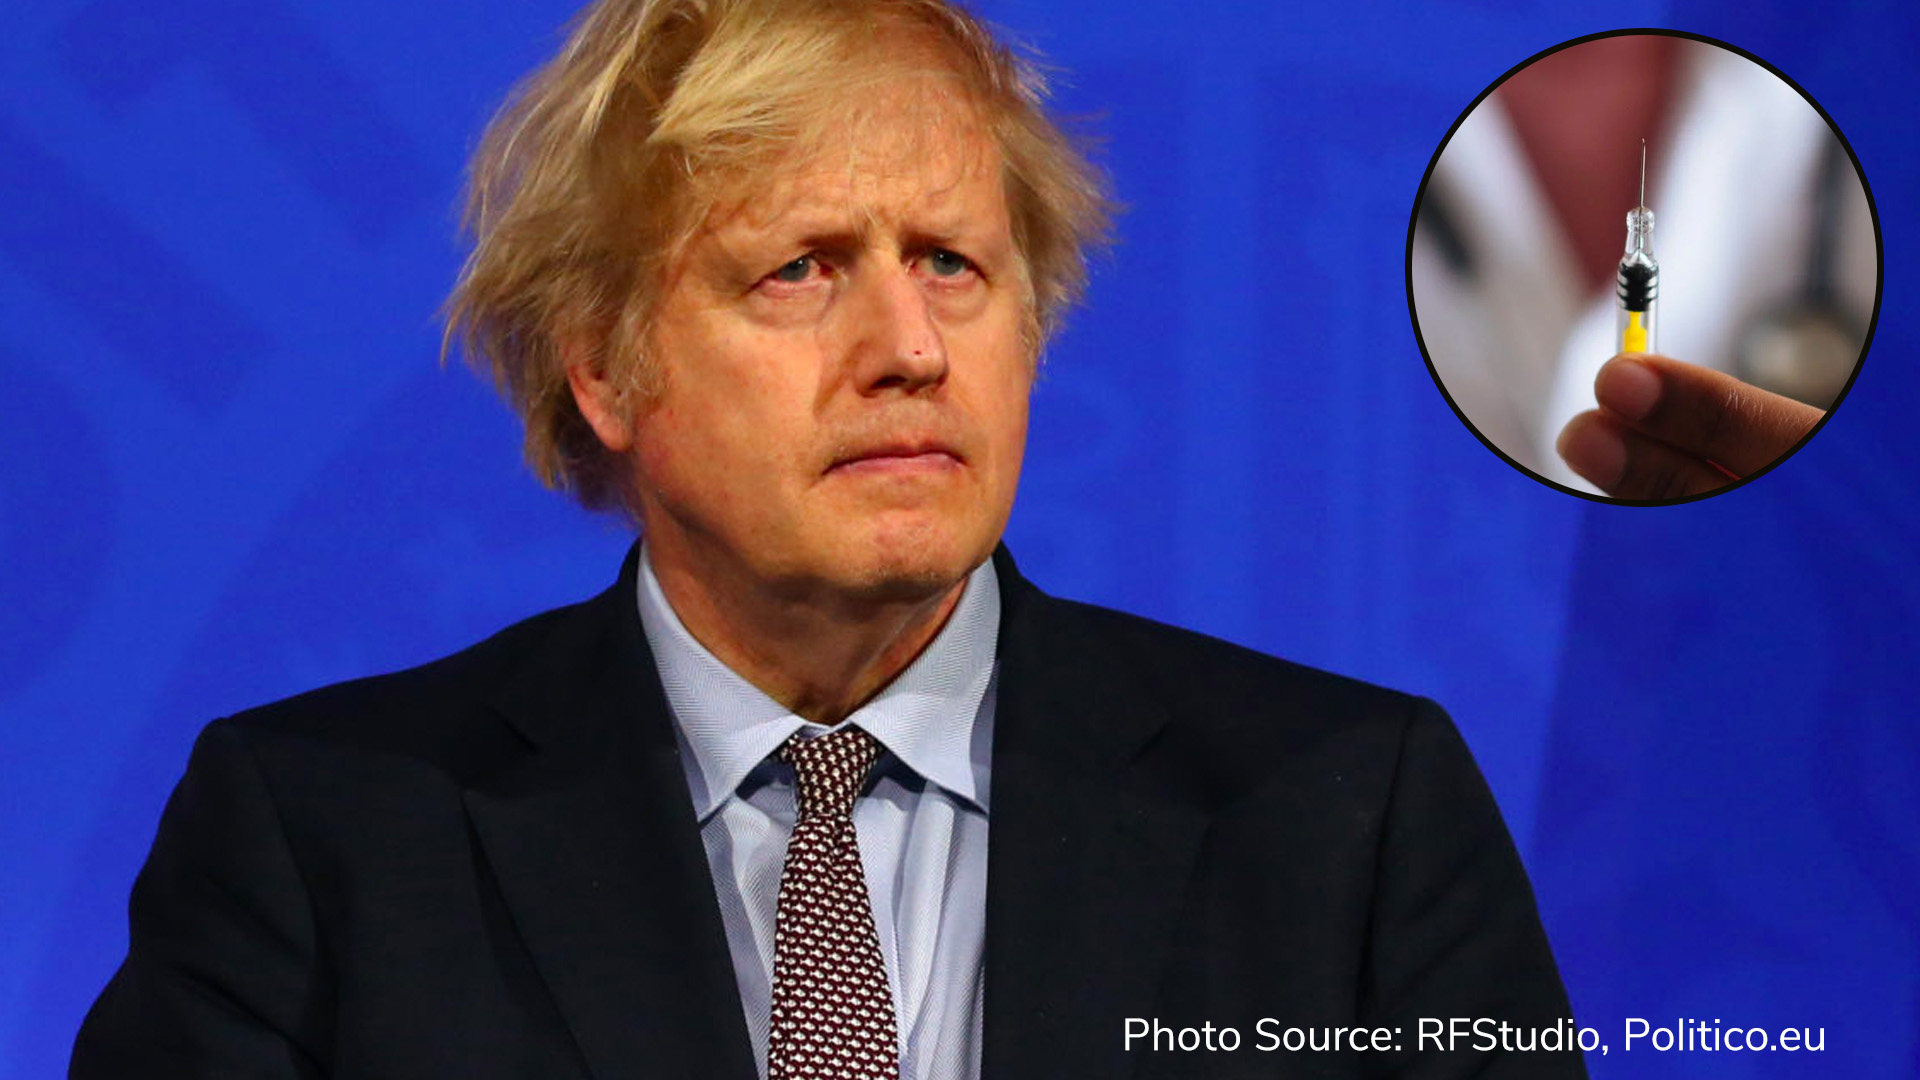 Boris Johnson’s vaccine passport plan faces political uproar